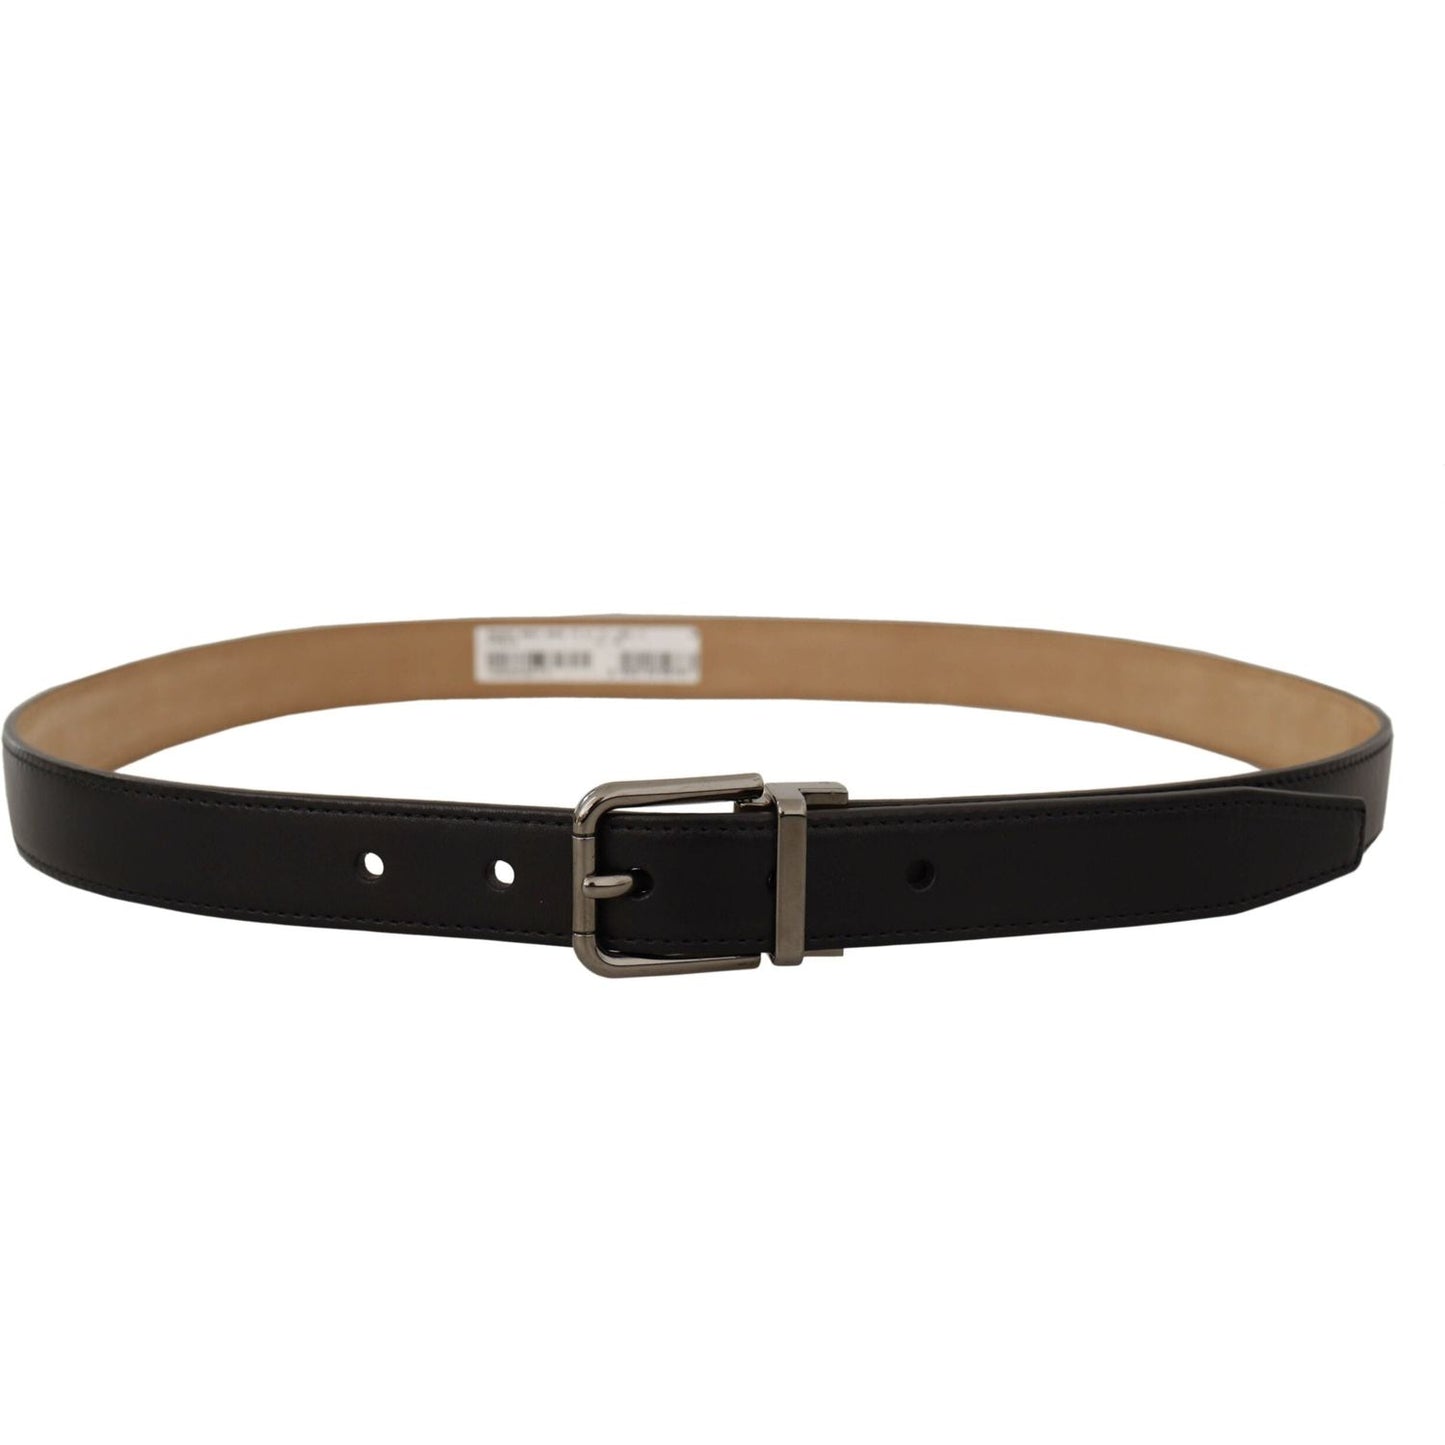 Dolce & Gabbana Sleek Black Leather Belt with Metal Buckle black-calf-leather-logo-engraved-metal-buckle-belt-11